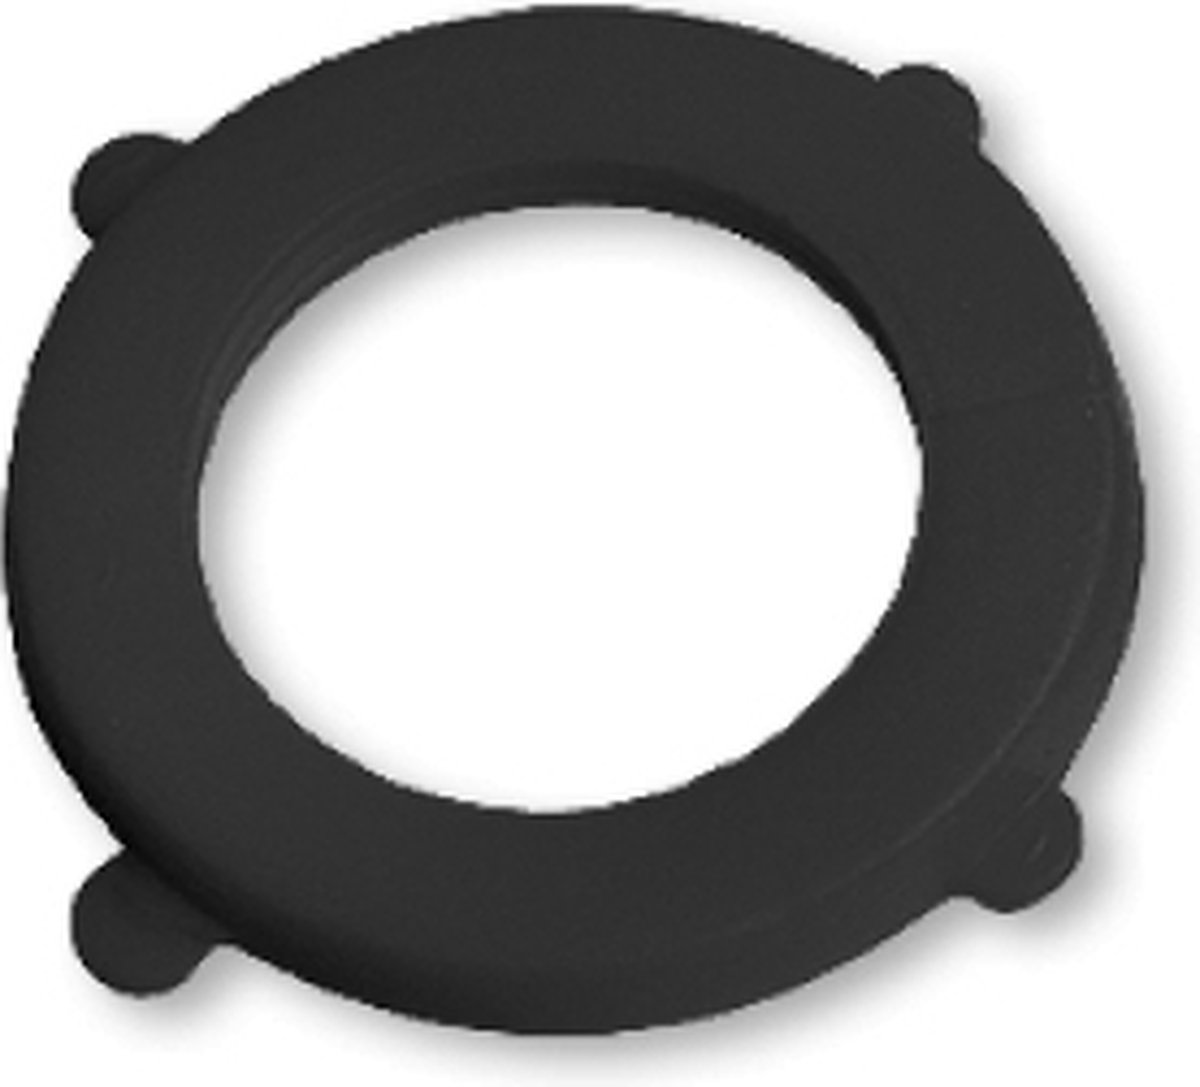 Vlakke ring 1/2 - voor kraanstuk of rvs slang met 1/2 binnendraad